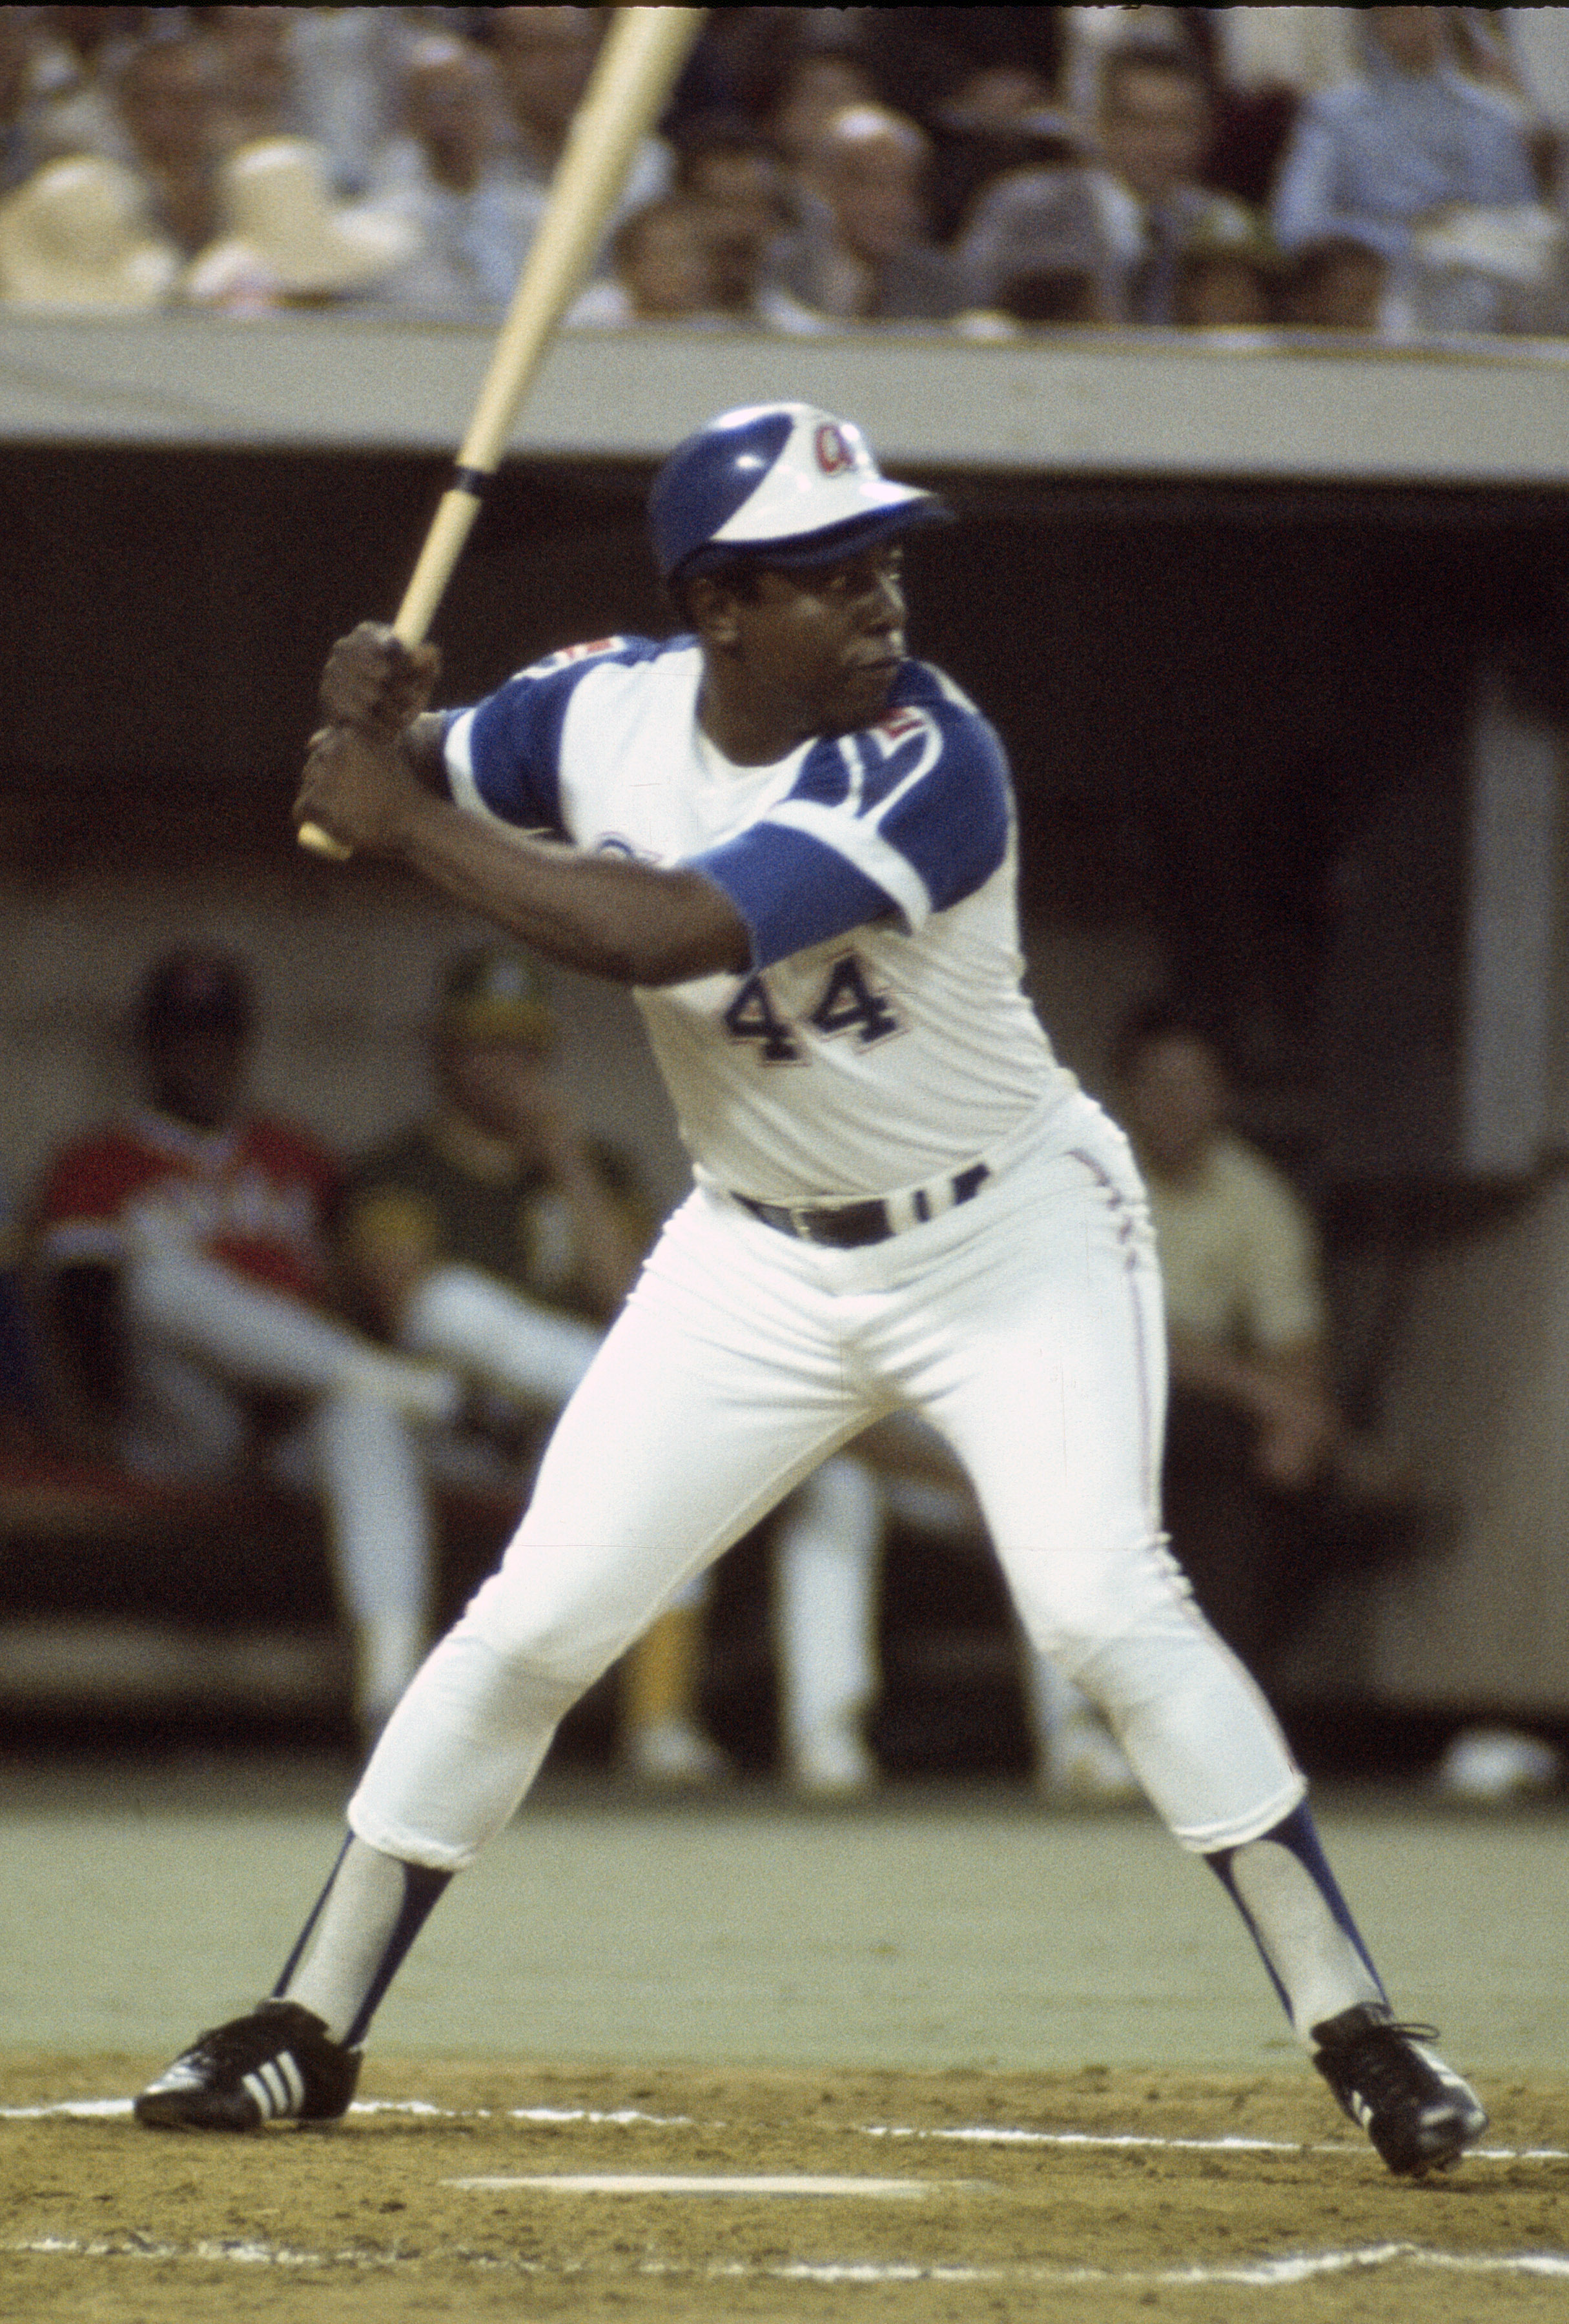 1974 Major League Baseball Allstar Game - American League v National League